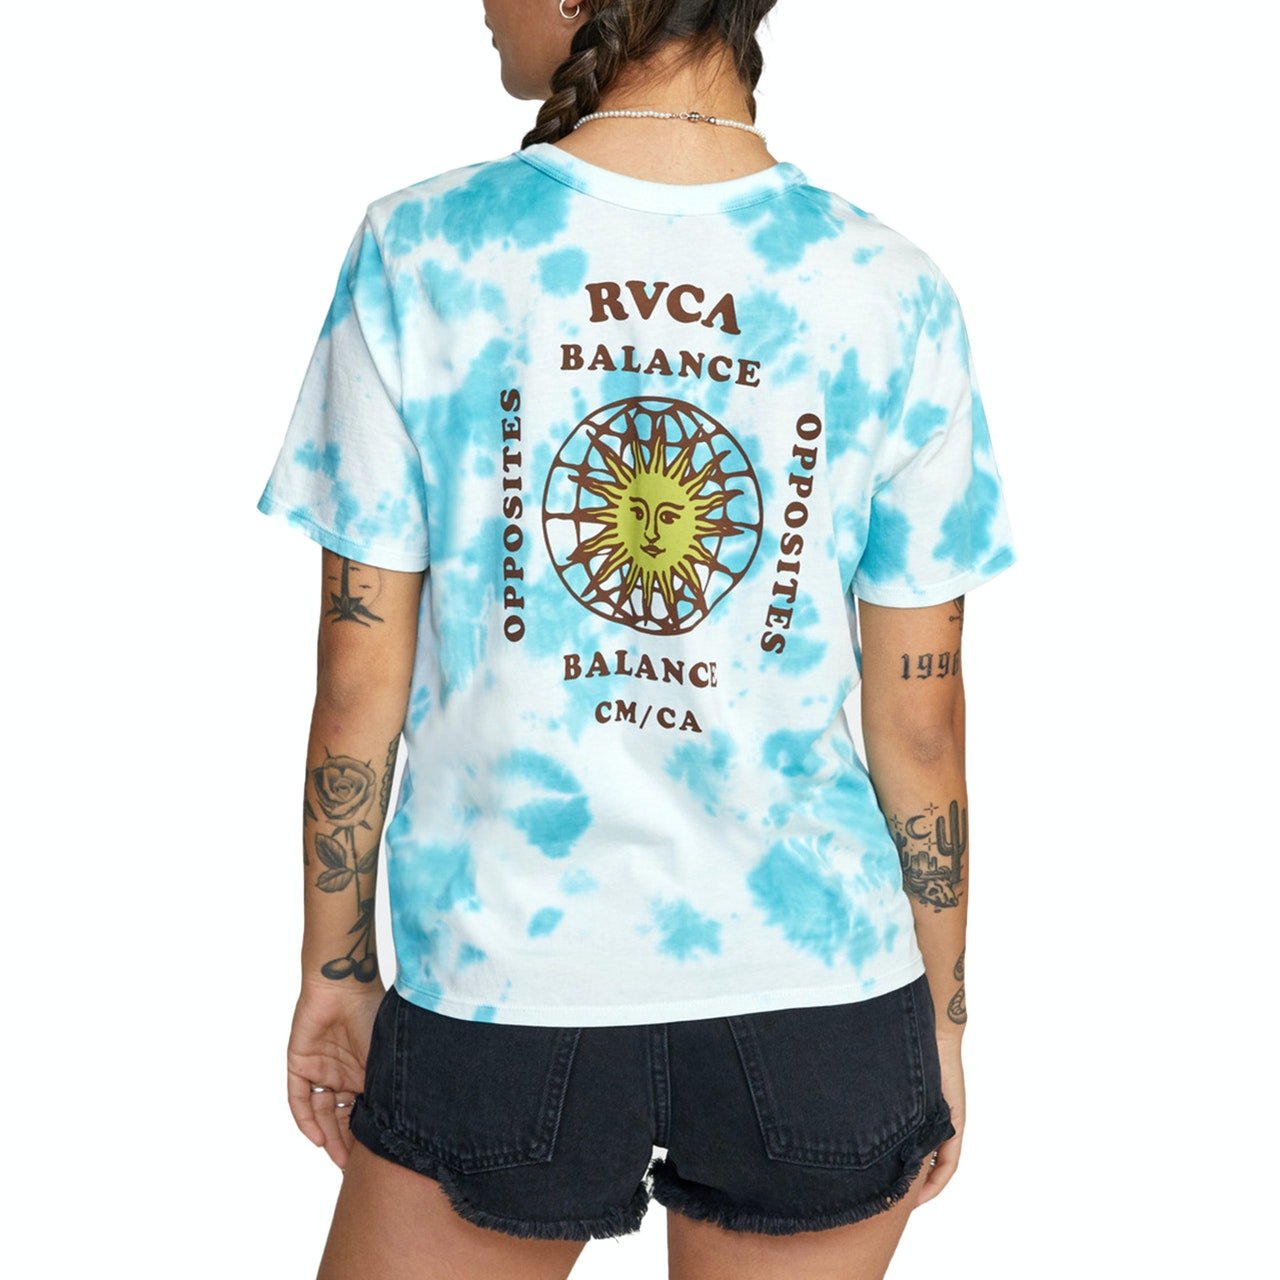 RVCA West Womens Short Sleeve T-Shirt - Blue Tie Dye